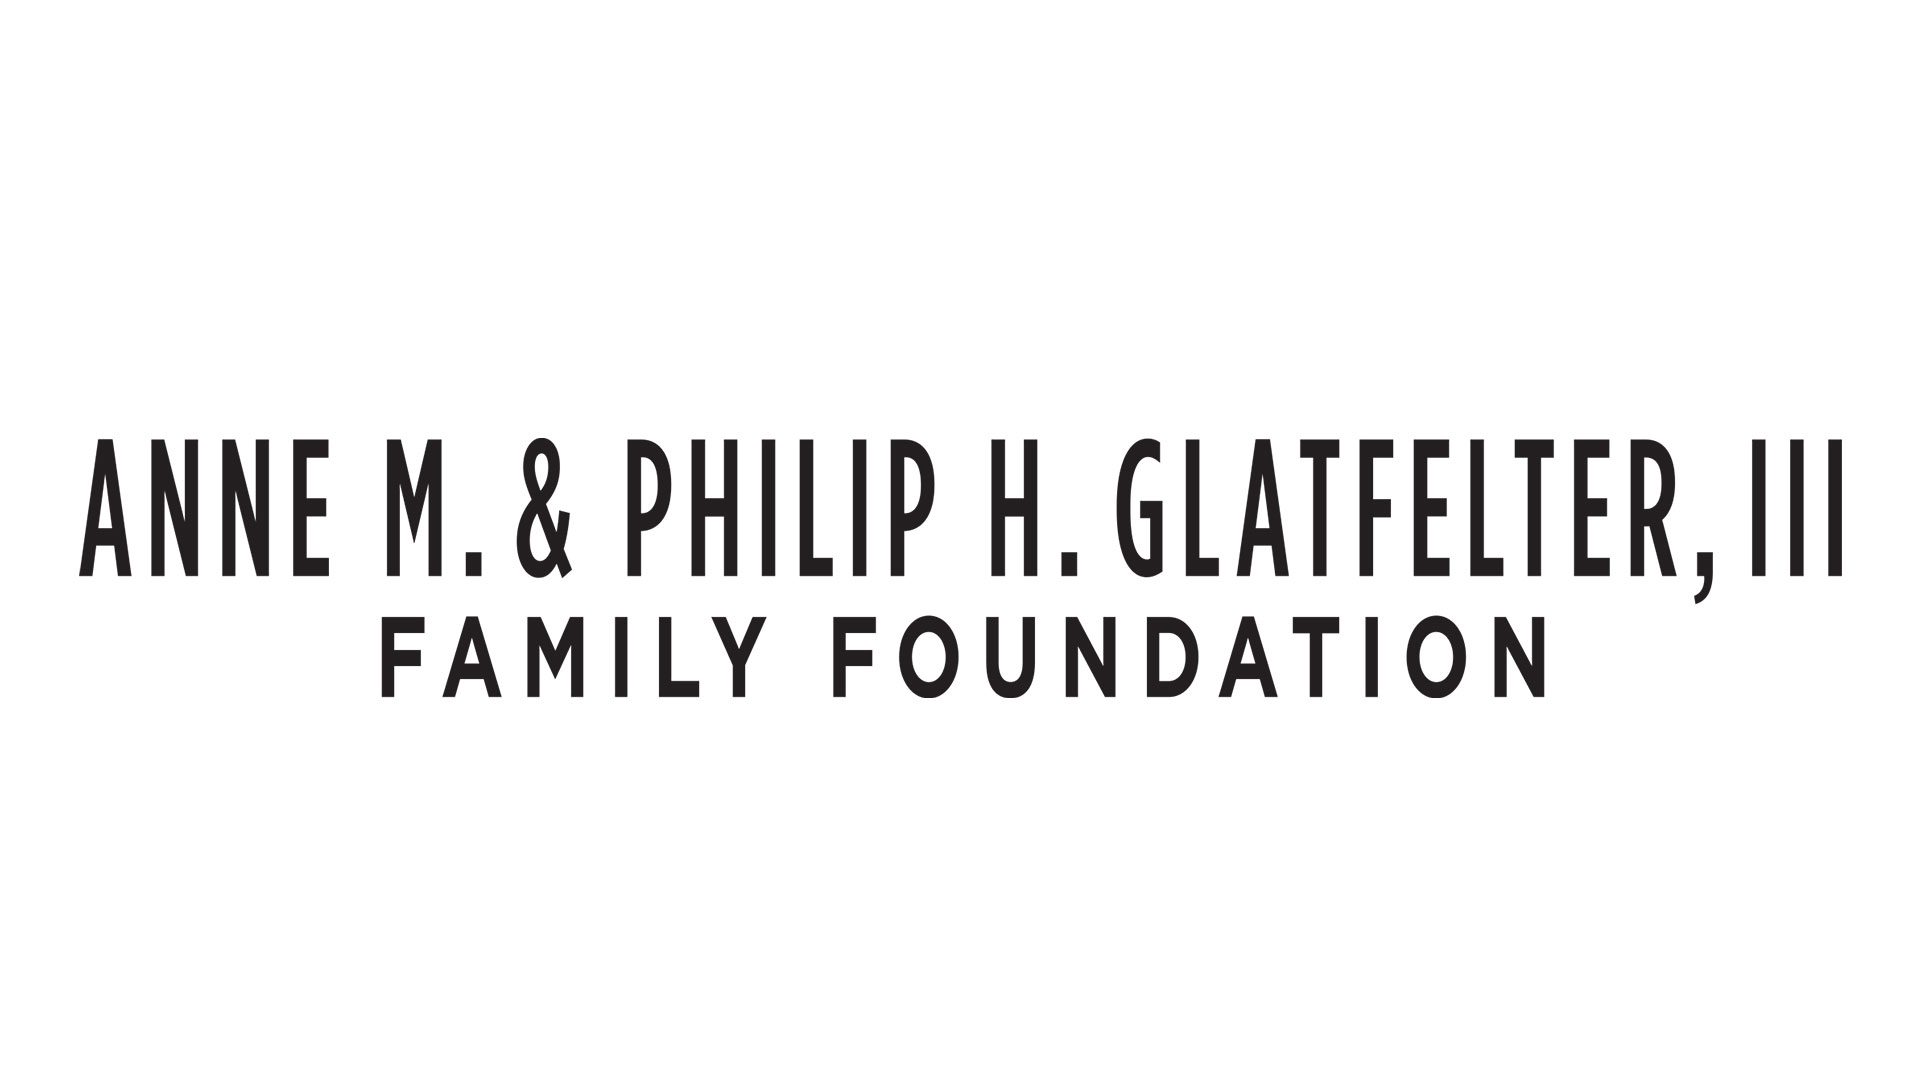 Anne & Philip Glatfelter Family Foundation